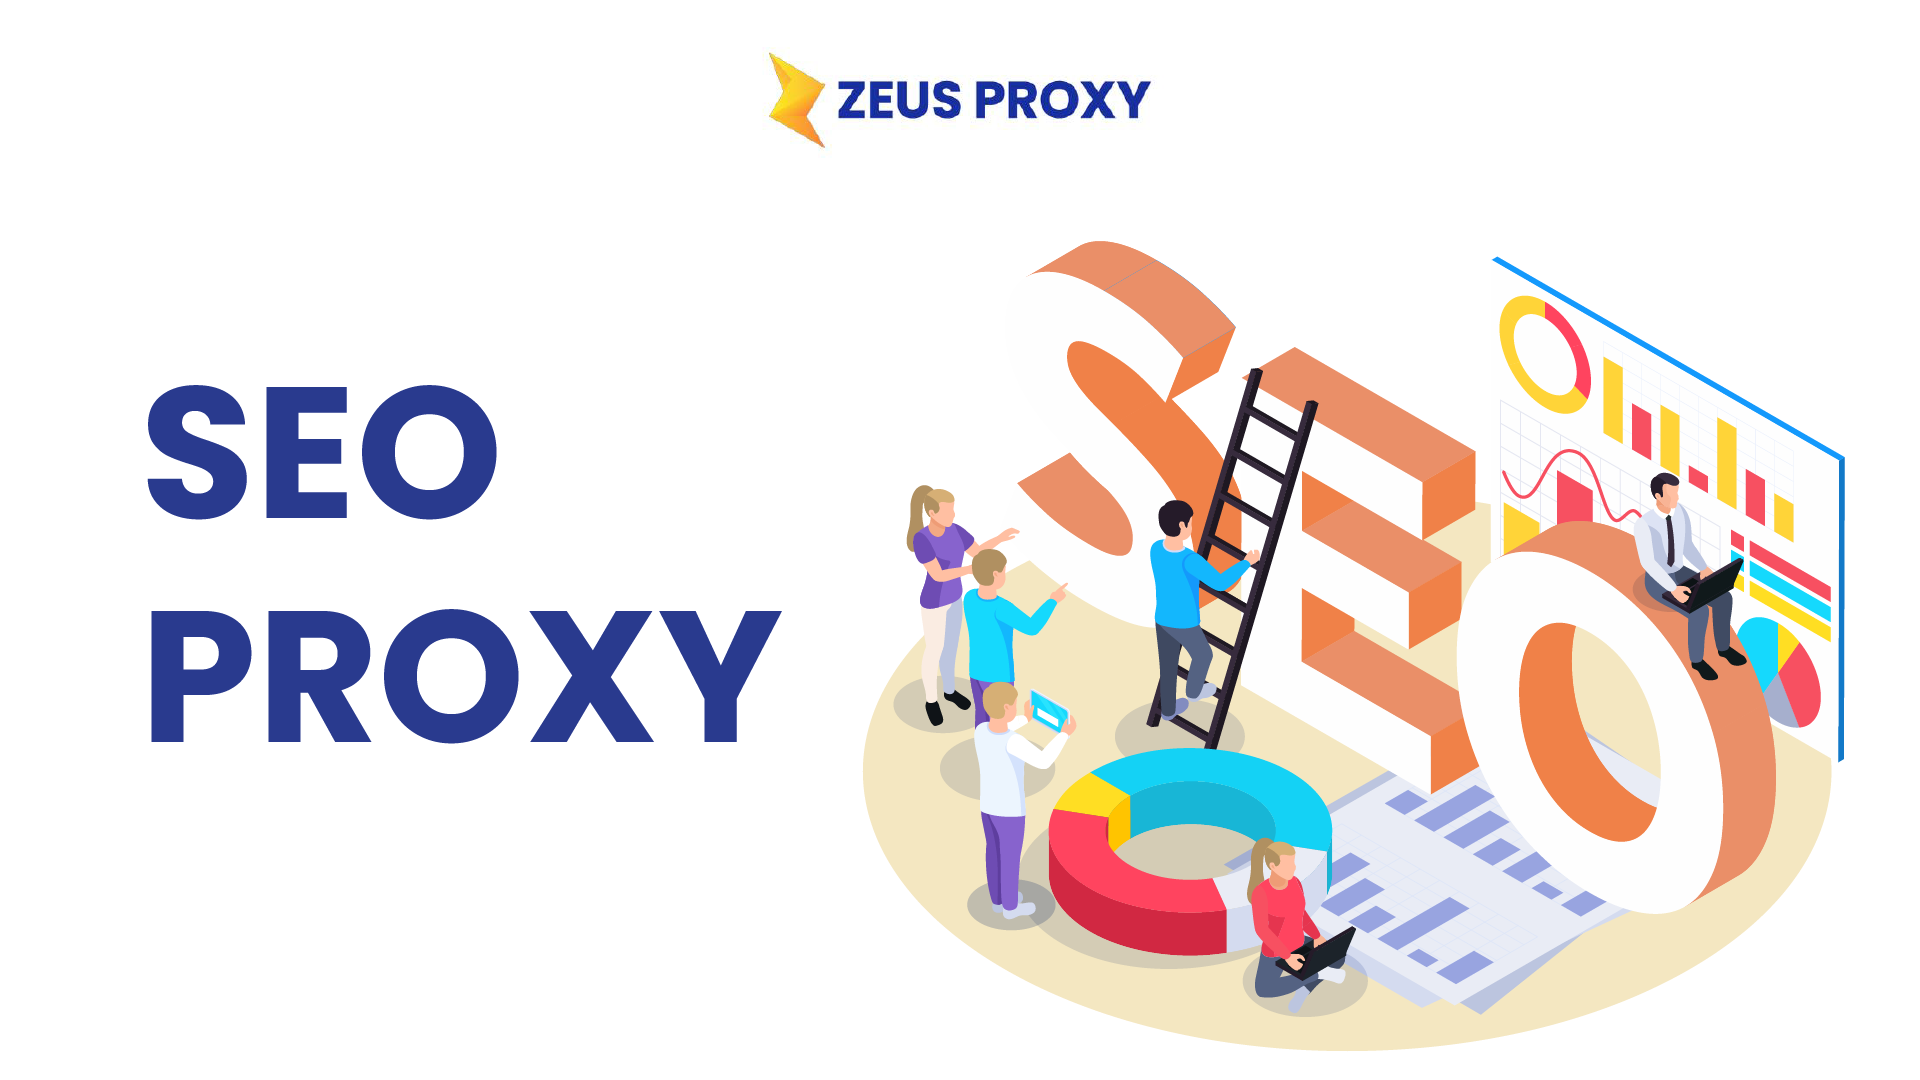 The Best SEO Proxy: How Zeus Proxy can help SEO